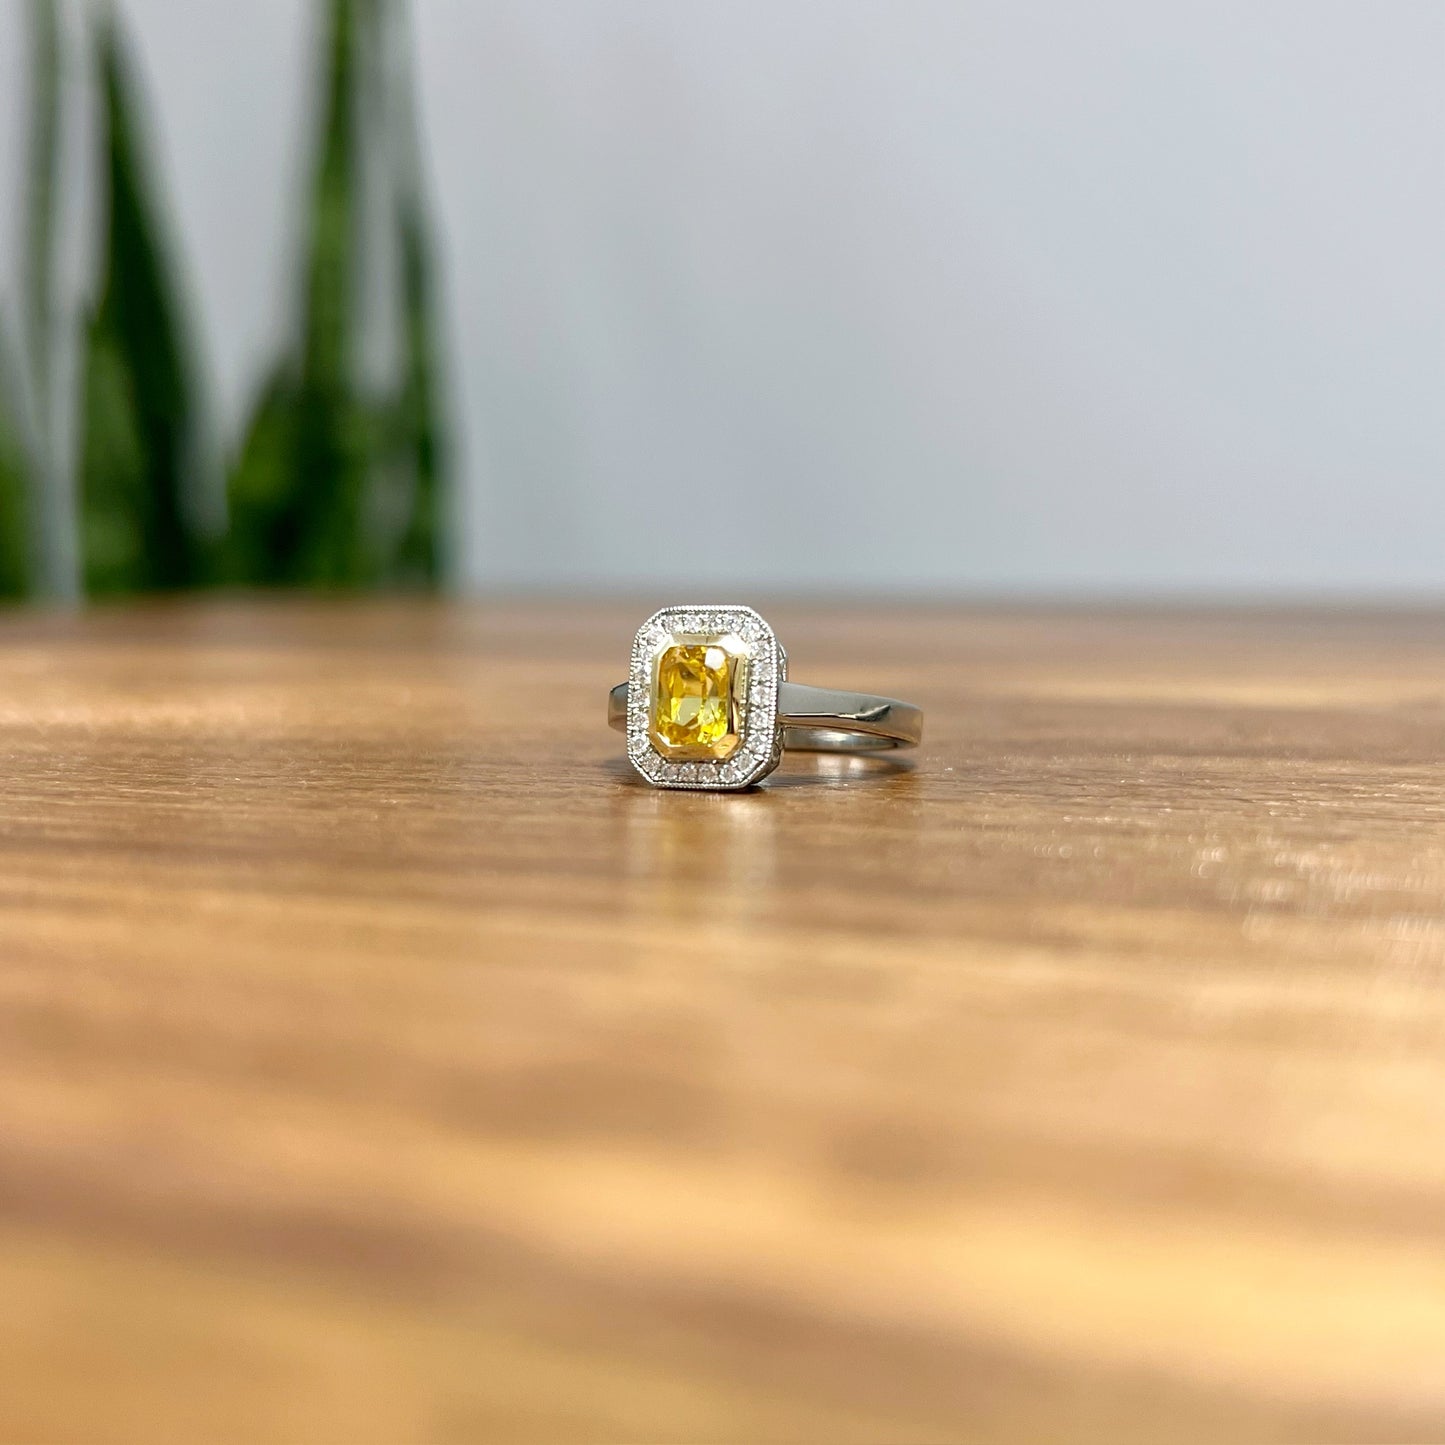 Yellow Sapphire Halo Ring